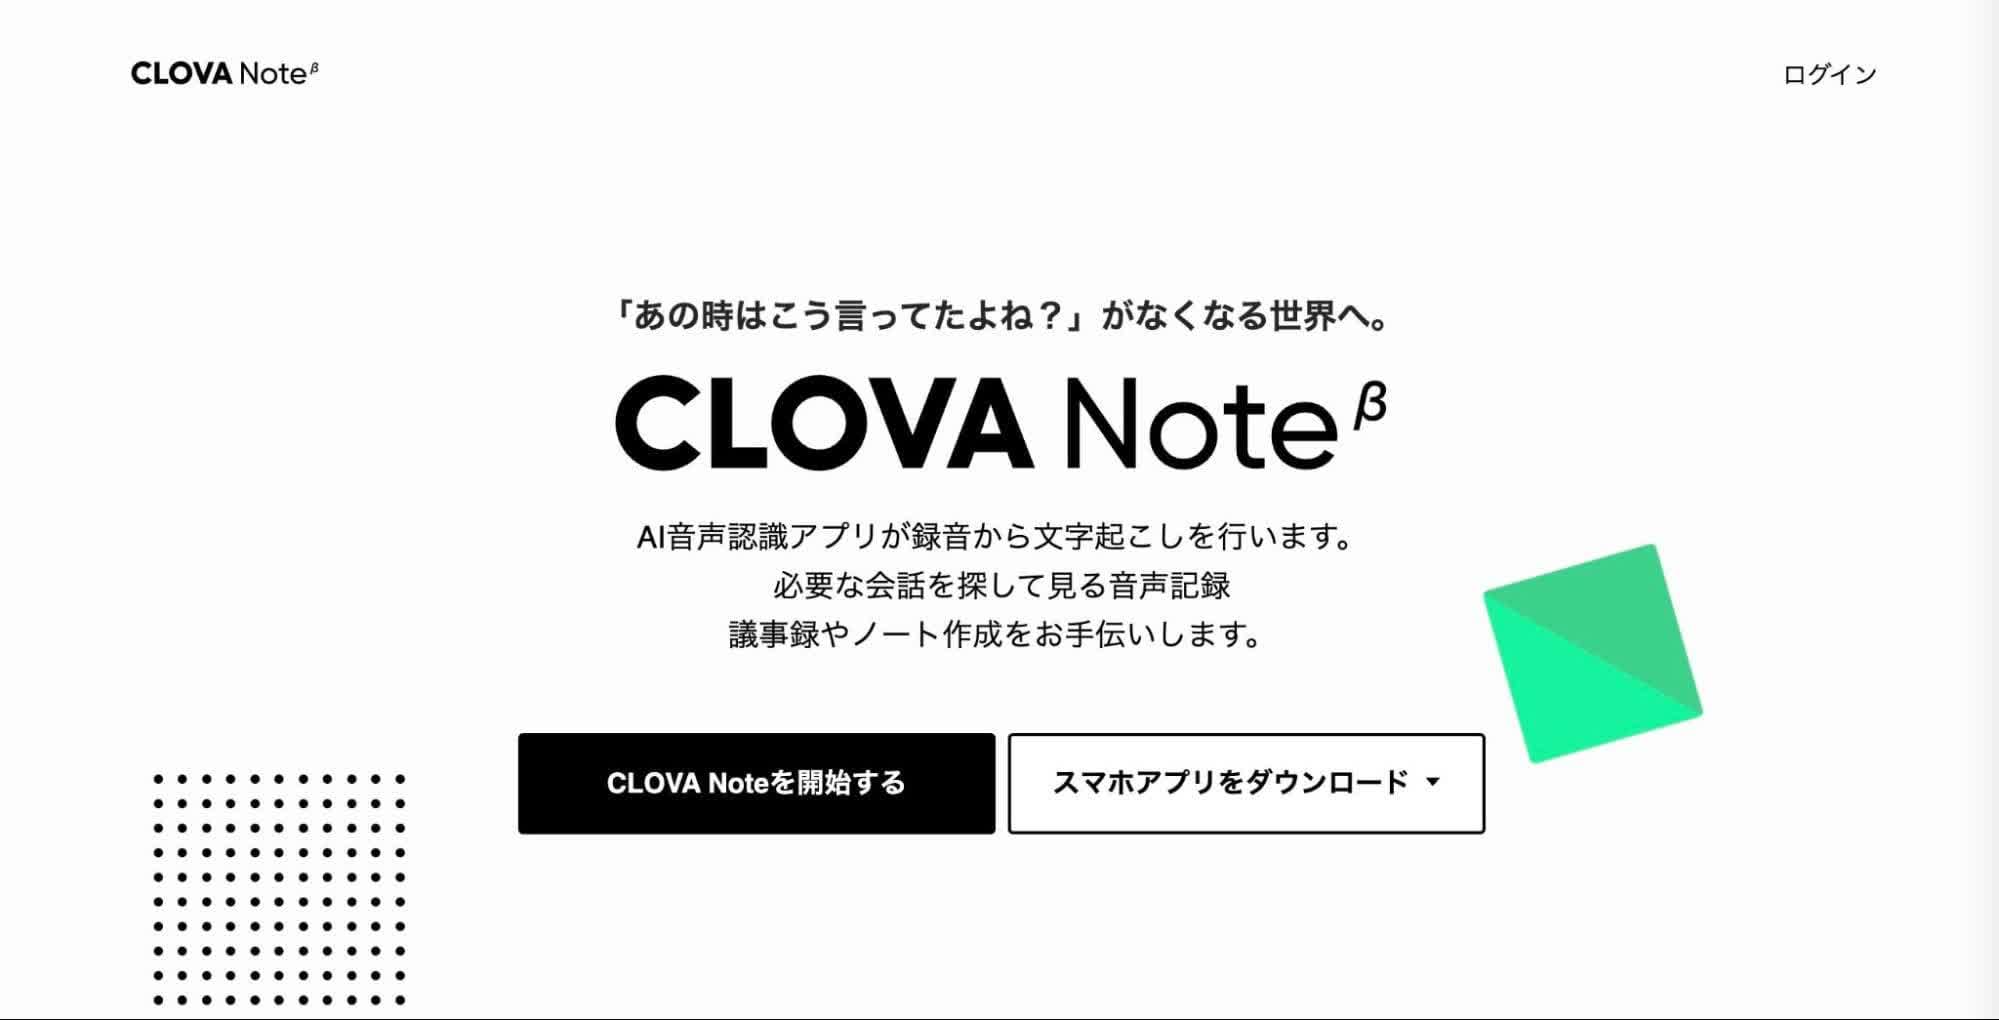 LINE CLOVA Note 